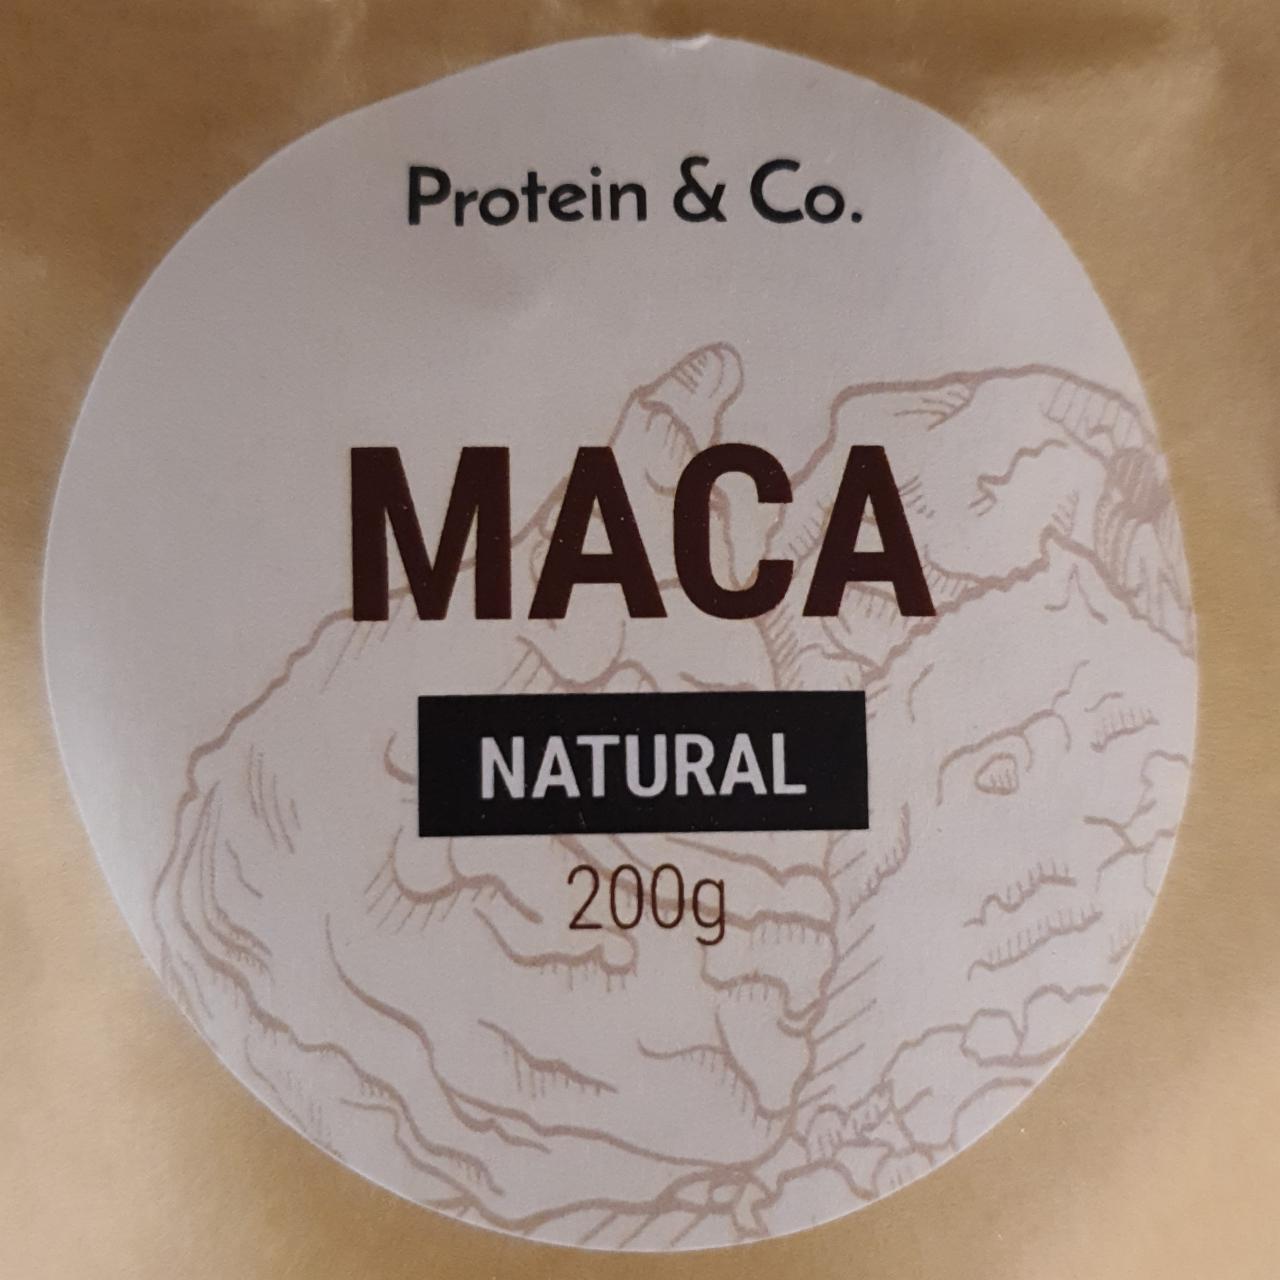 Fotografie - Maca Natural Protein & Co.